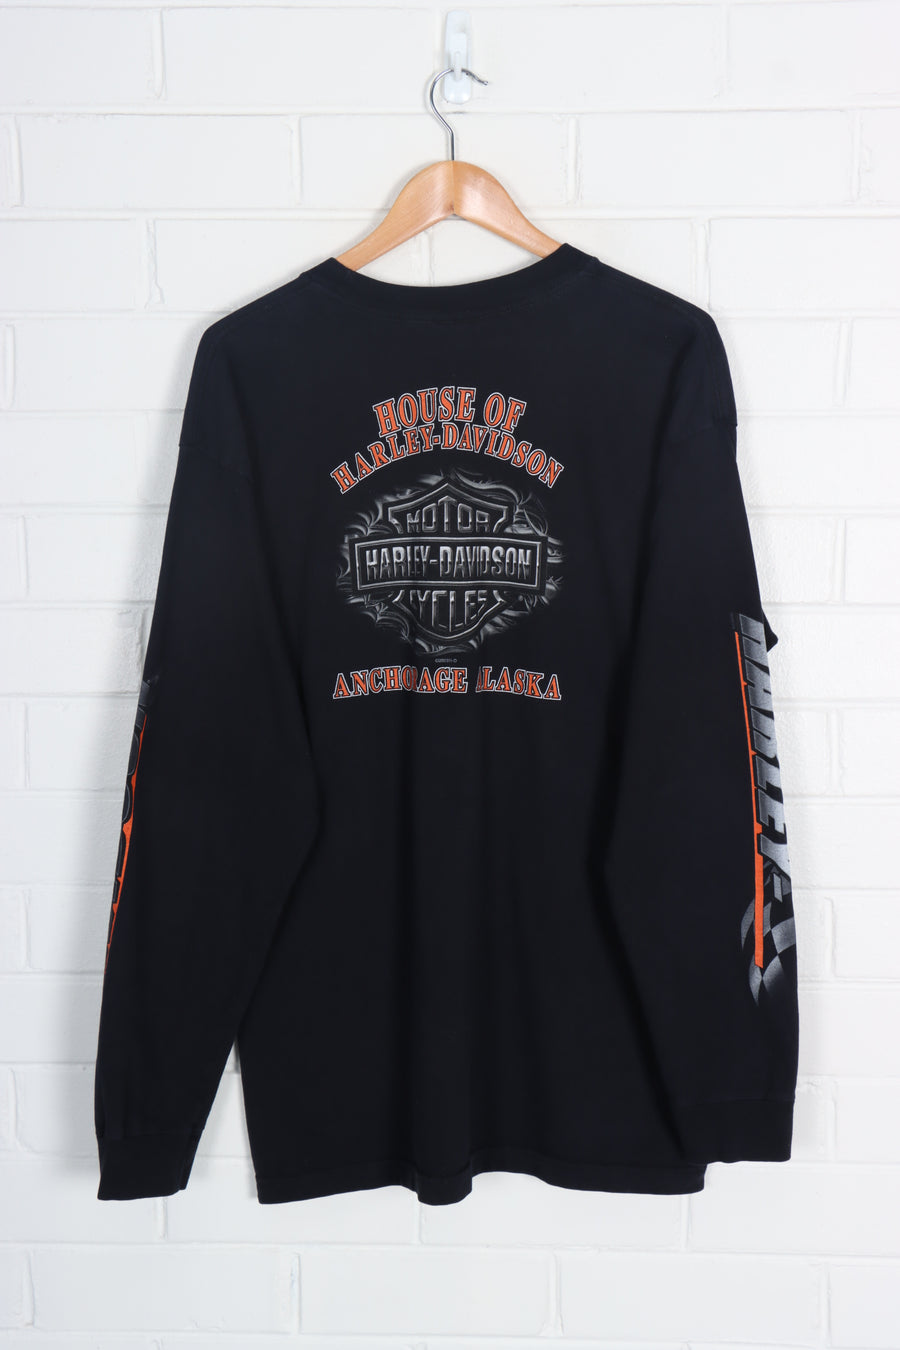 HARLEY DAVIDSON 'House of Harley' Alaska All Over Long Sleeve T-Shirt (XL)